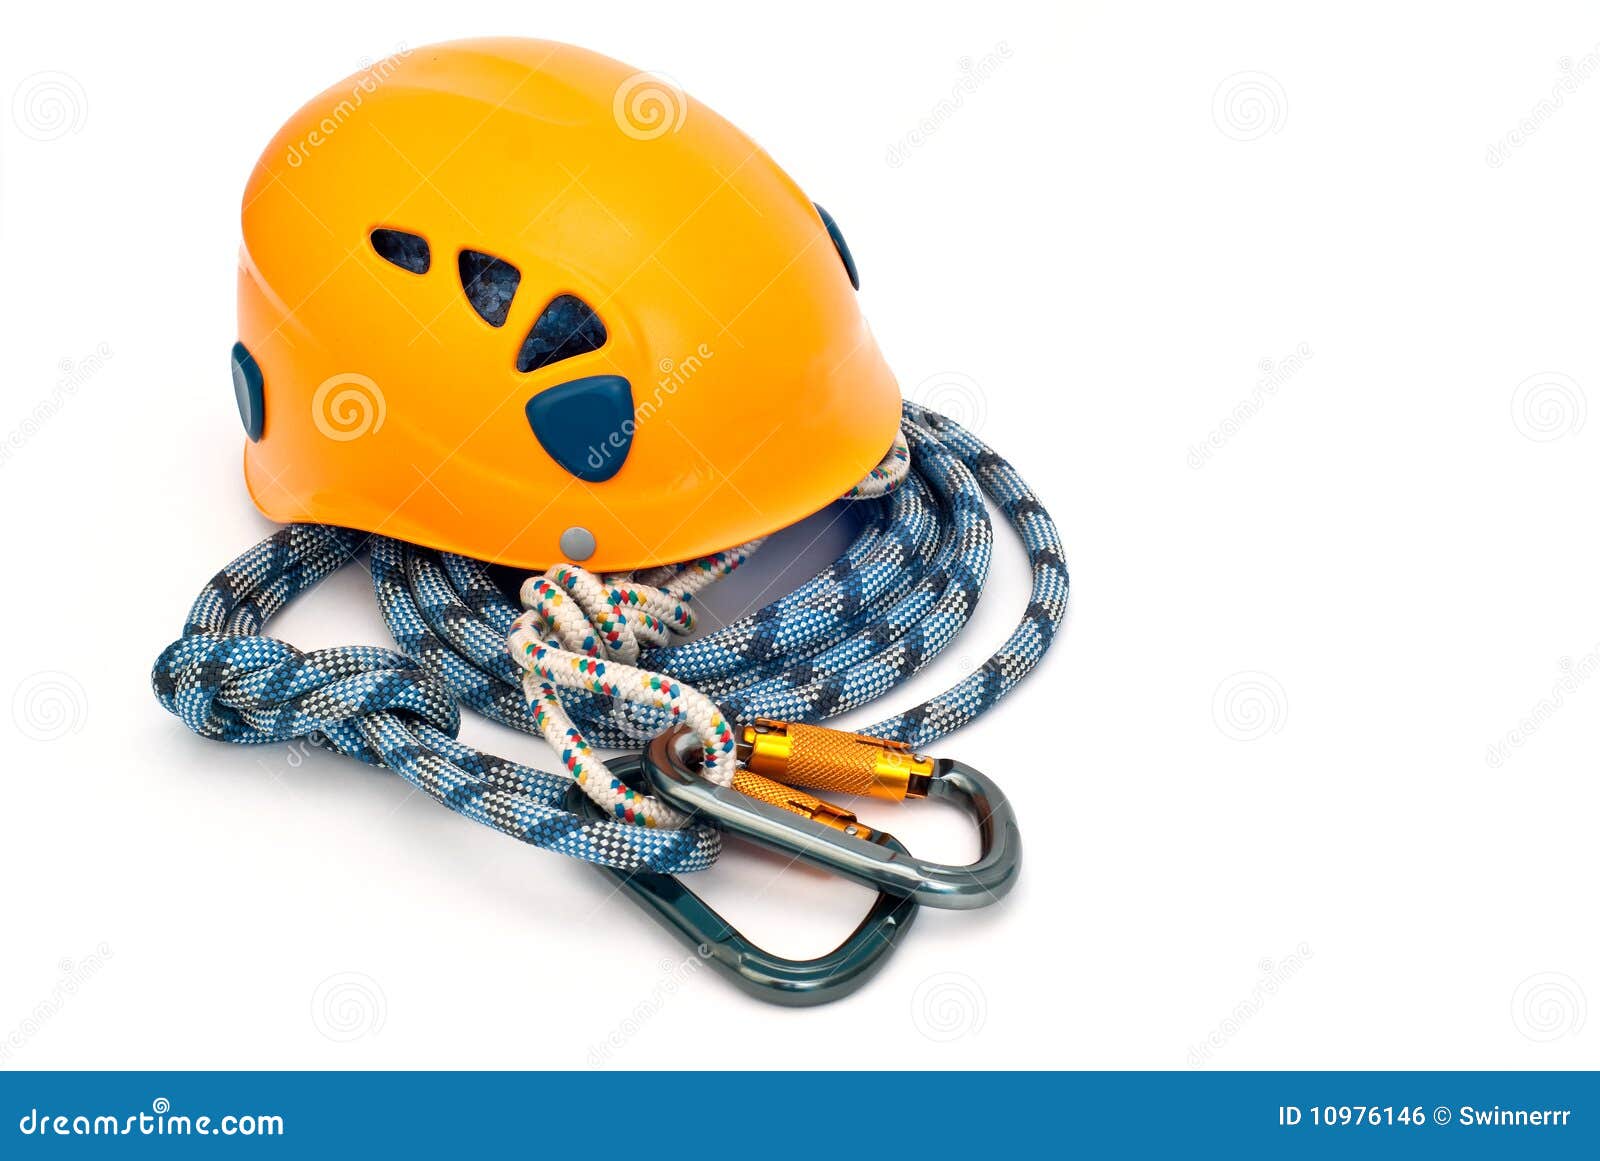 https://thumbs.dreamstime.com/z/climbing-gear-carabiners-helmet-rope-10976146.jpg